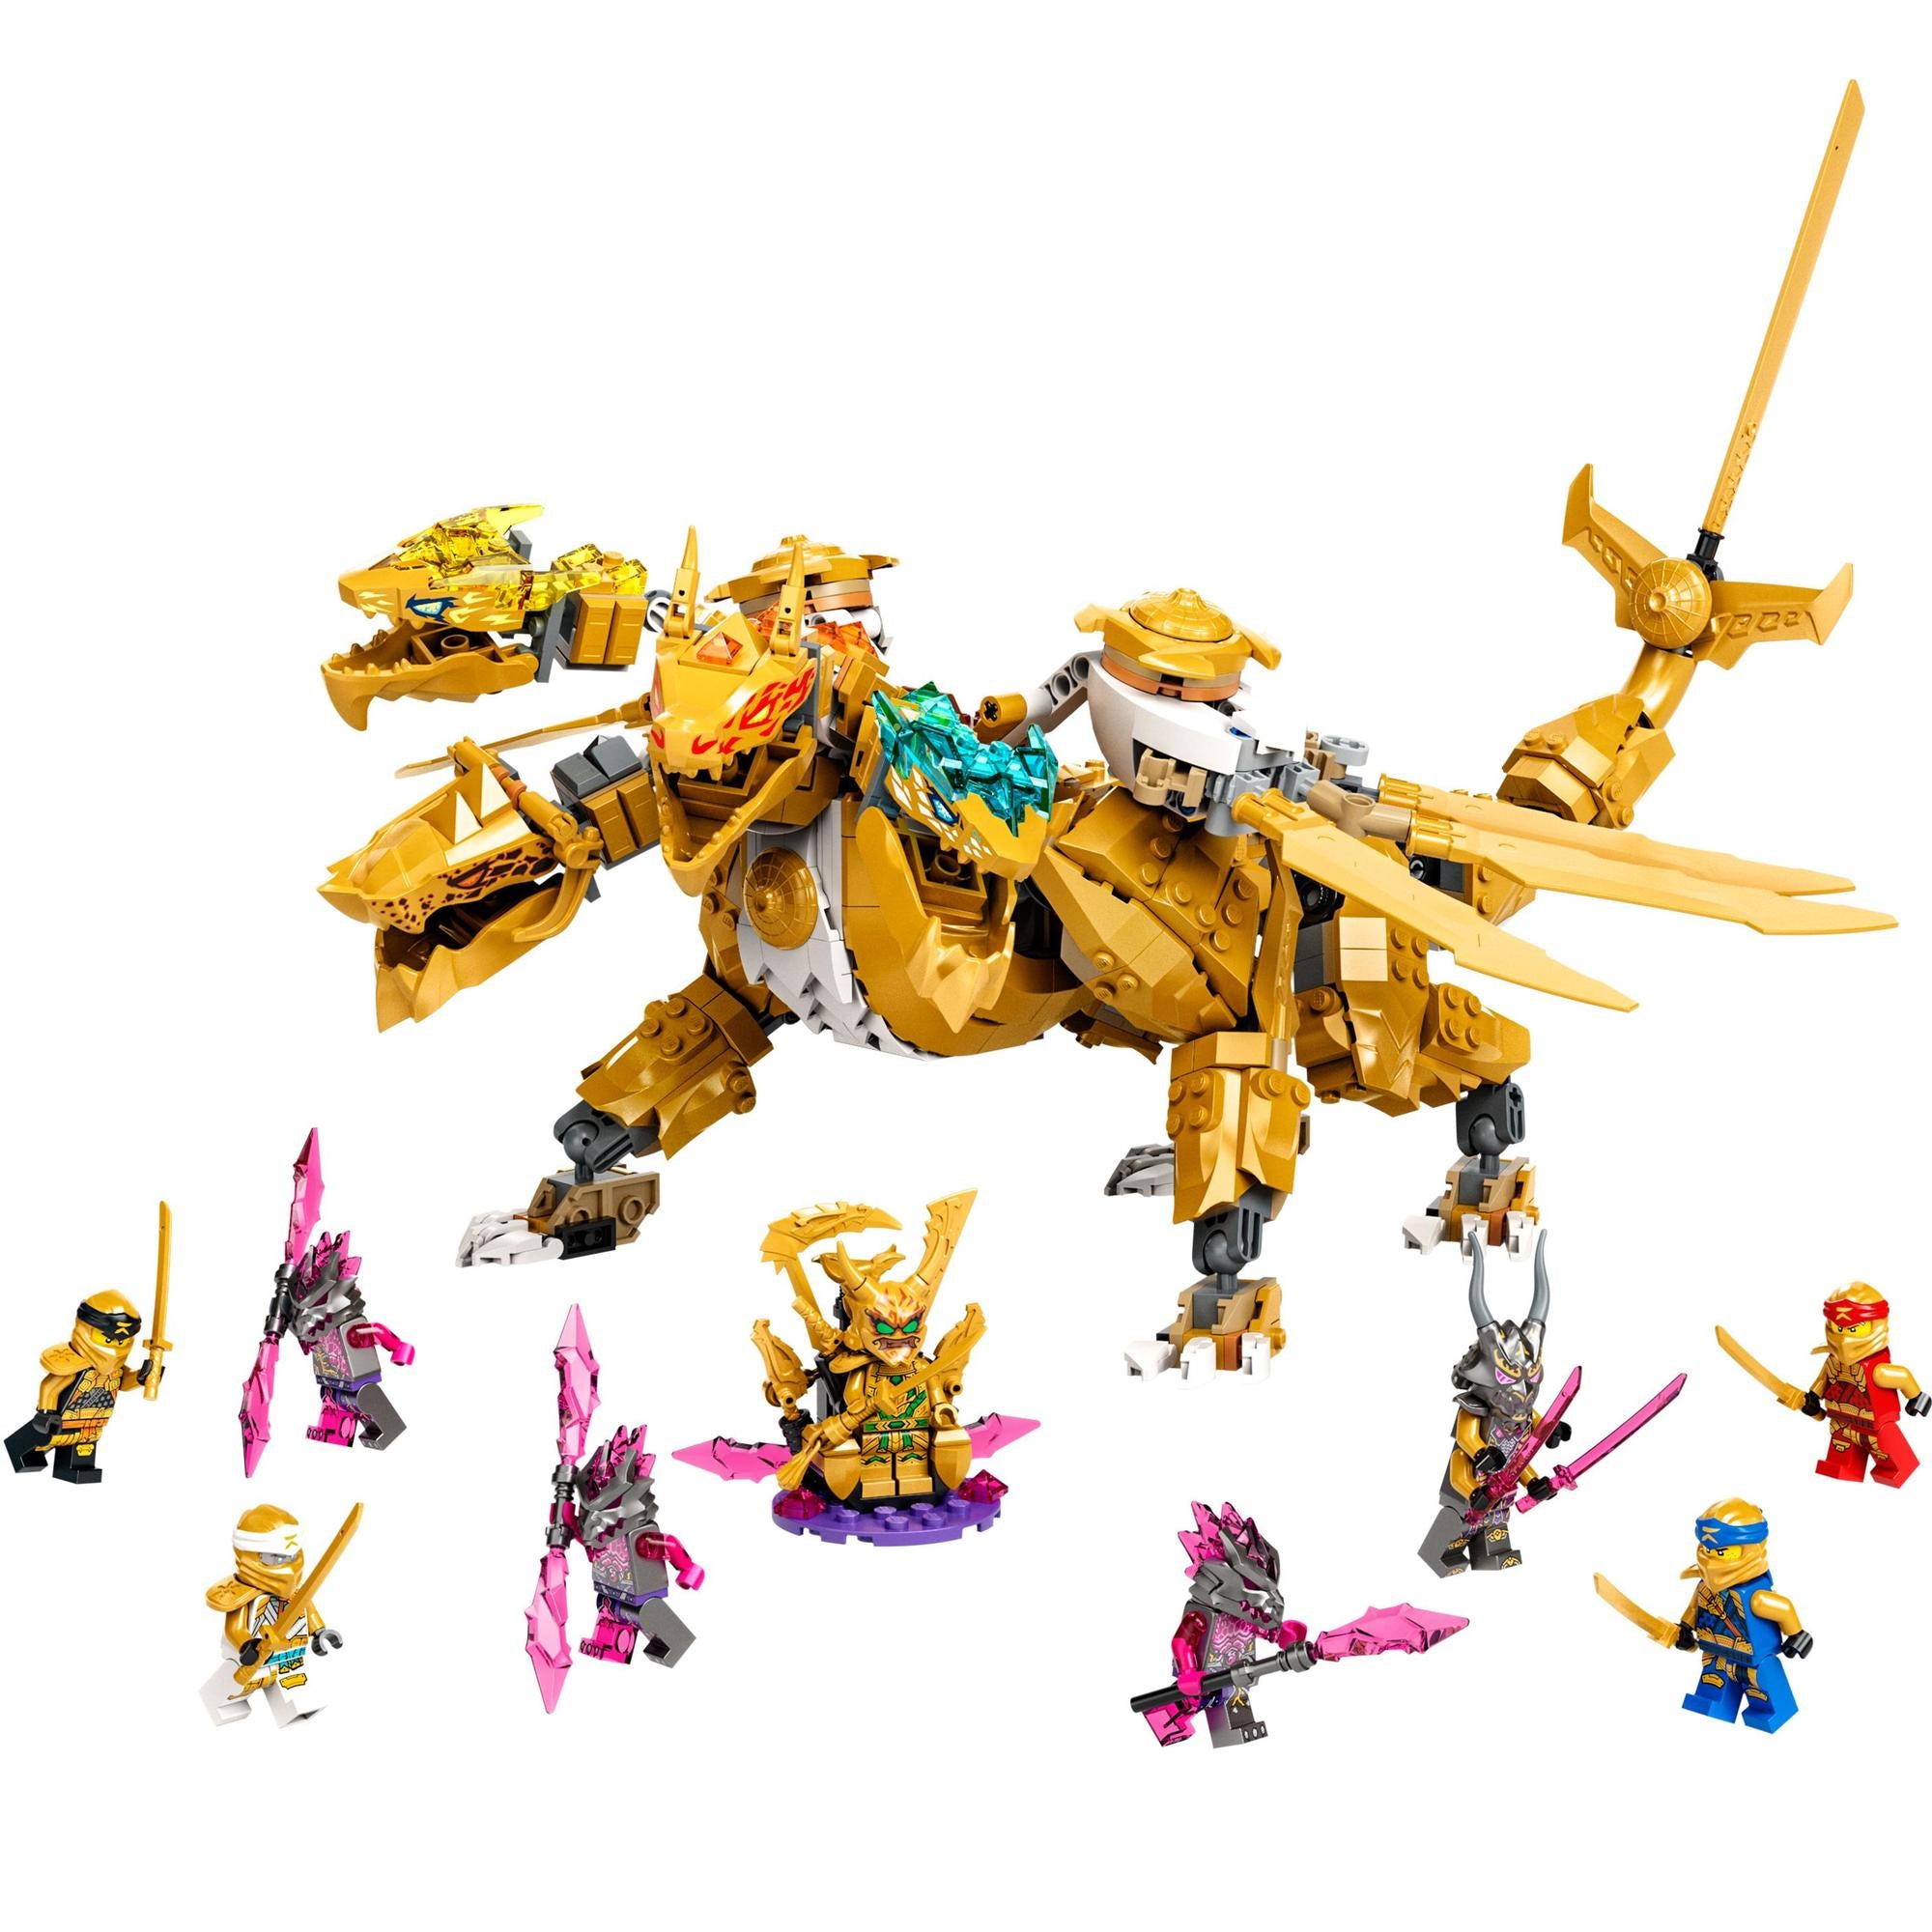 LEGO® | 71774 | Lloyds Ultragolddrache